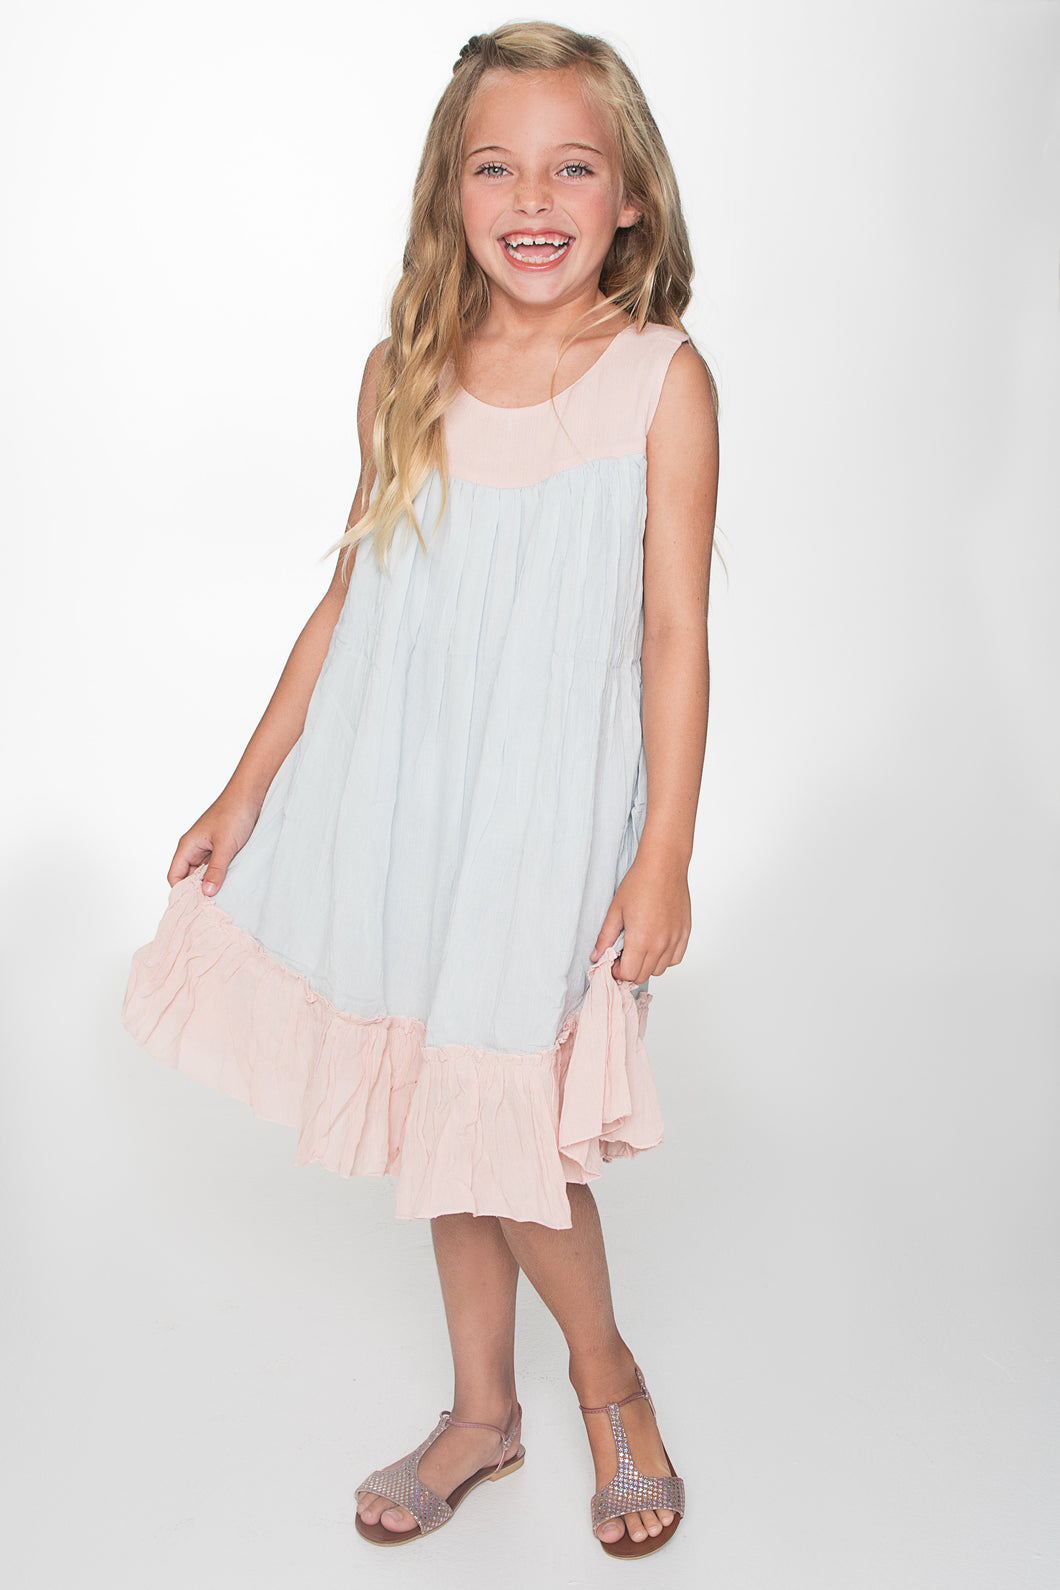 Pink and Blue Swing Dress - Kids Wholesale Boutique Clothing, Dress - Girls Dresses, Yo Baby Wholesale - Yo Baby